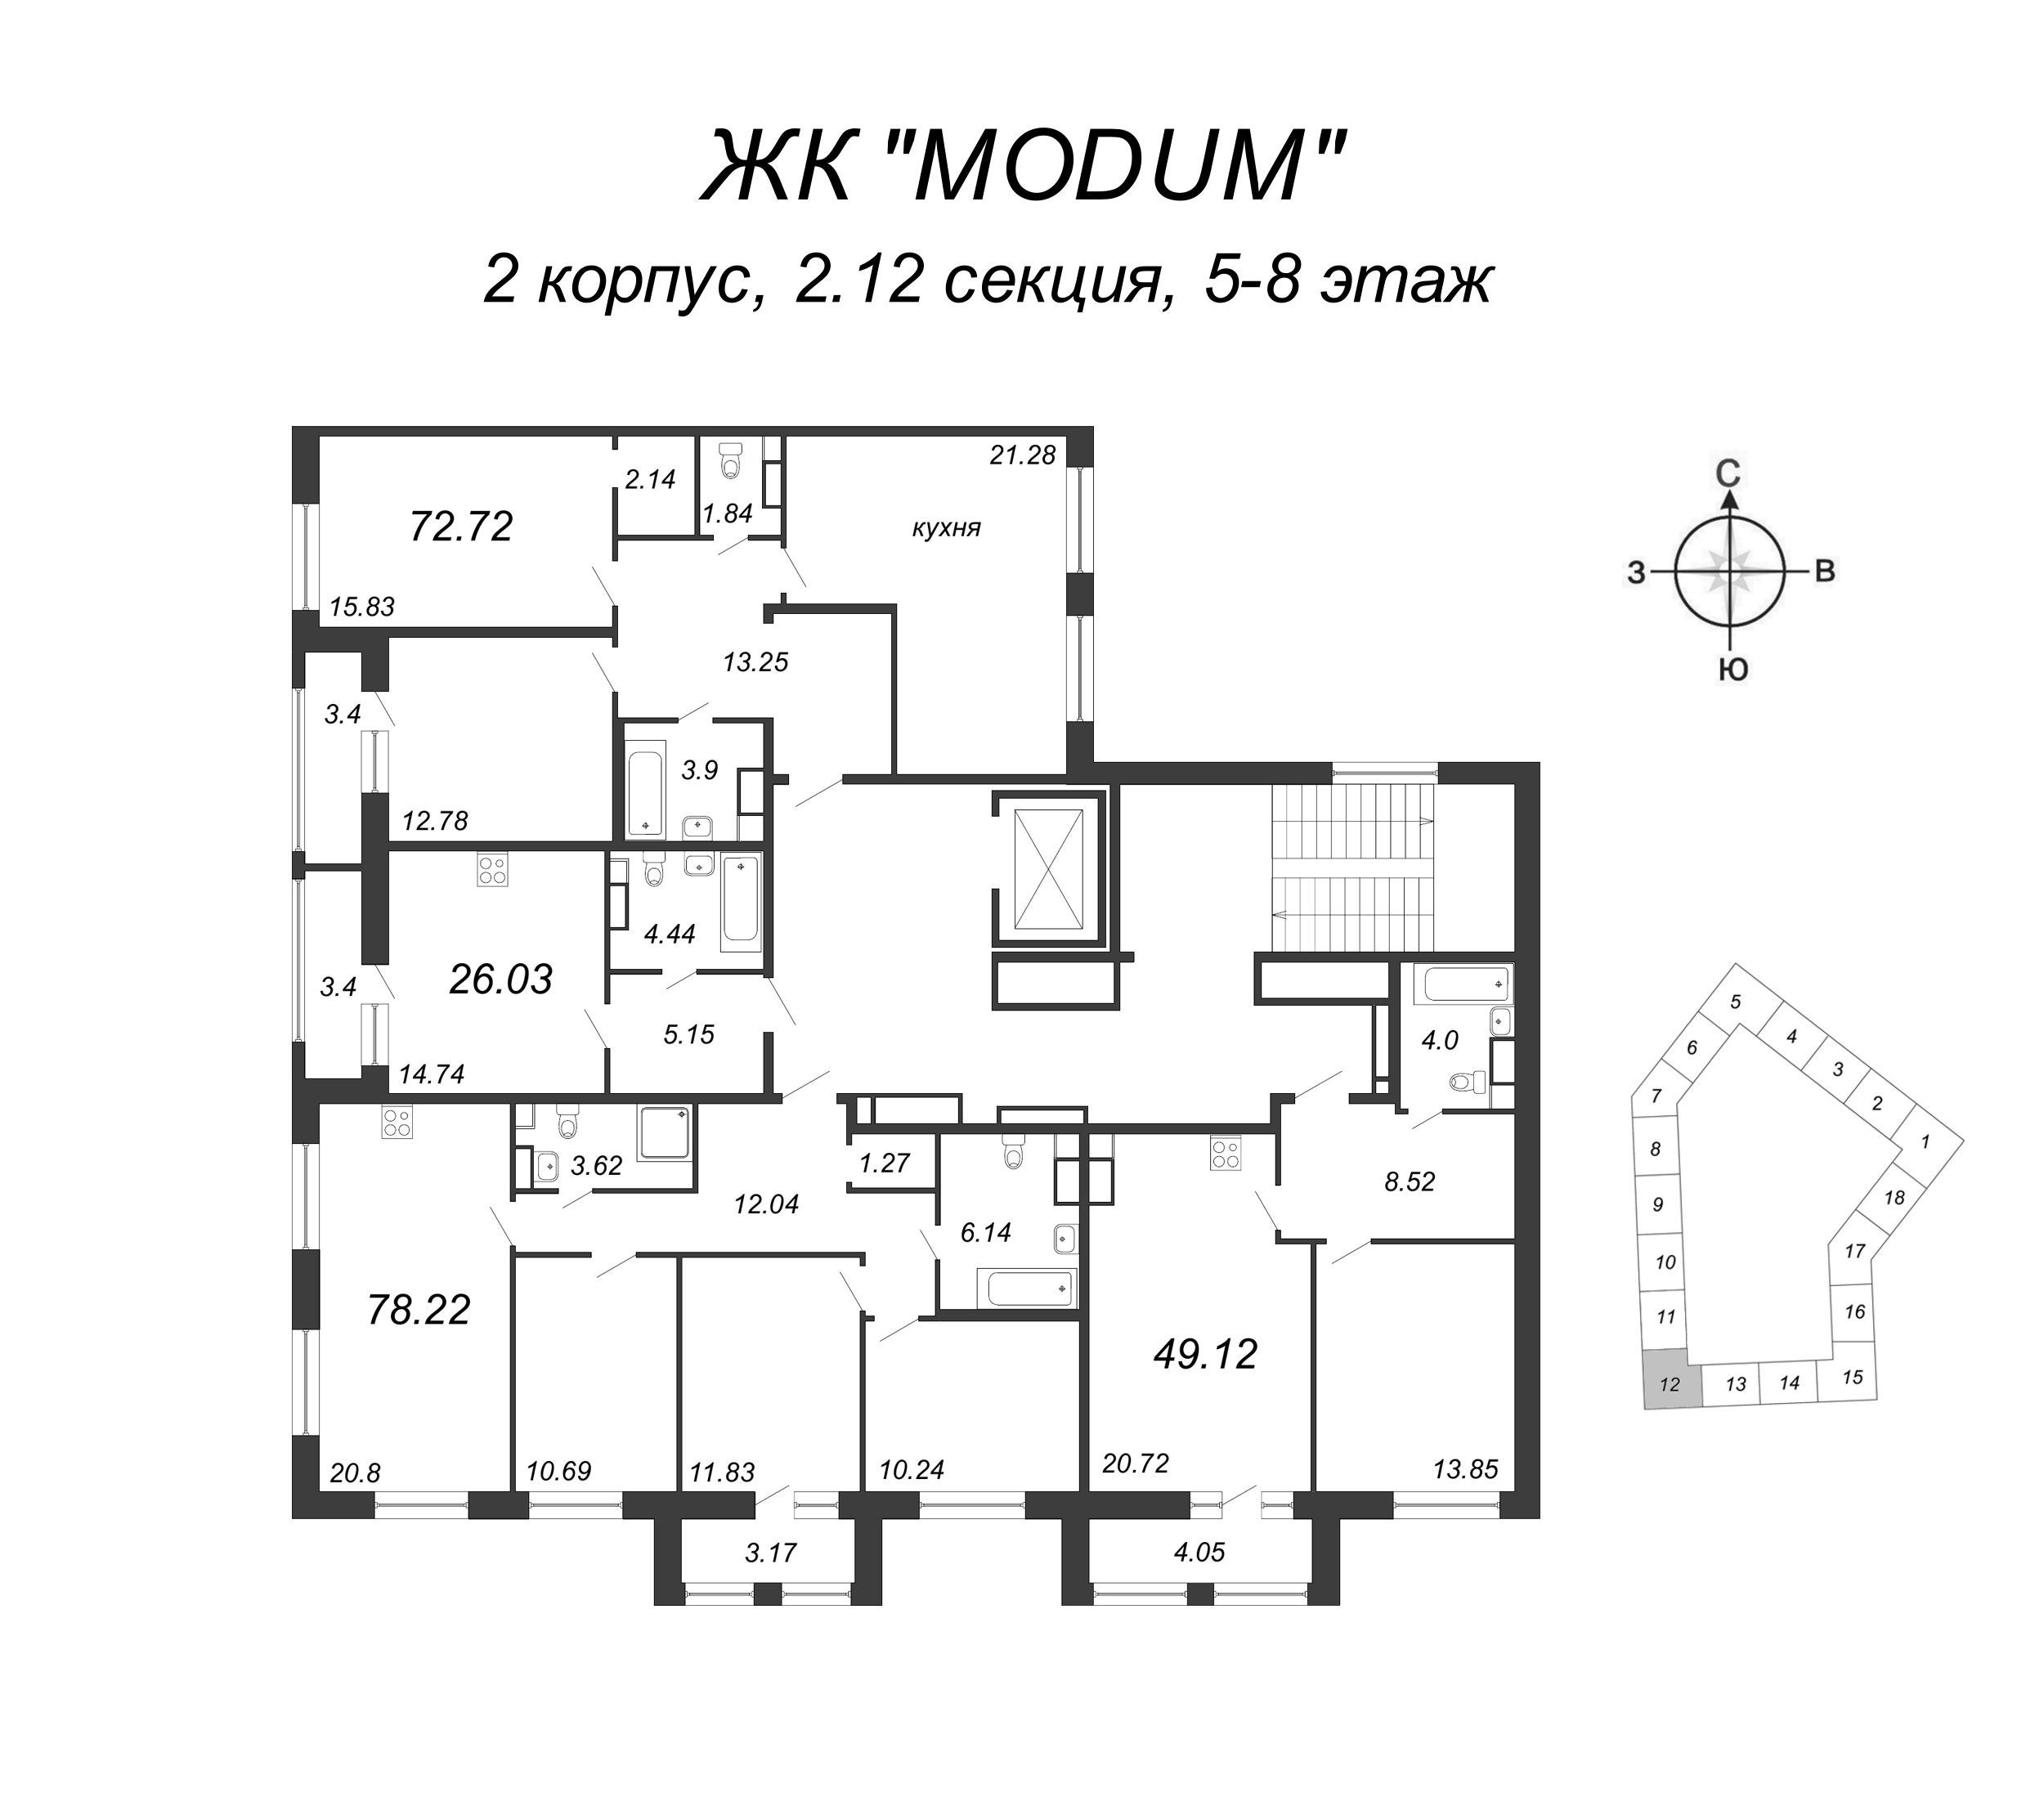 2-комнатная (Евро) квартира, 49.12 м² - планировка этажа